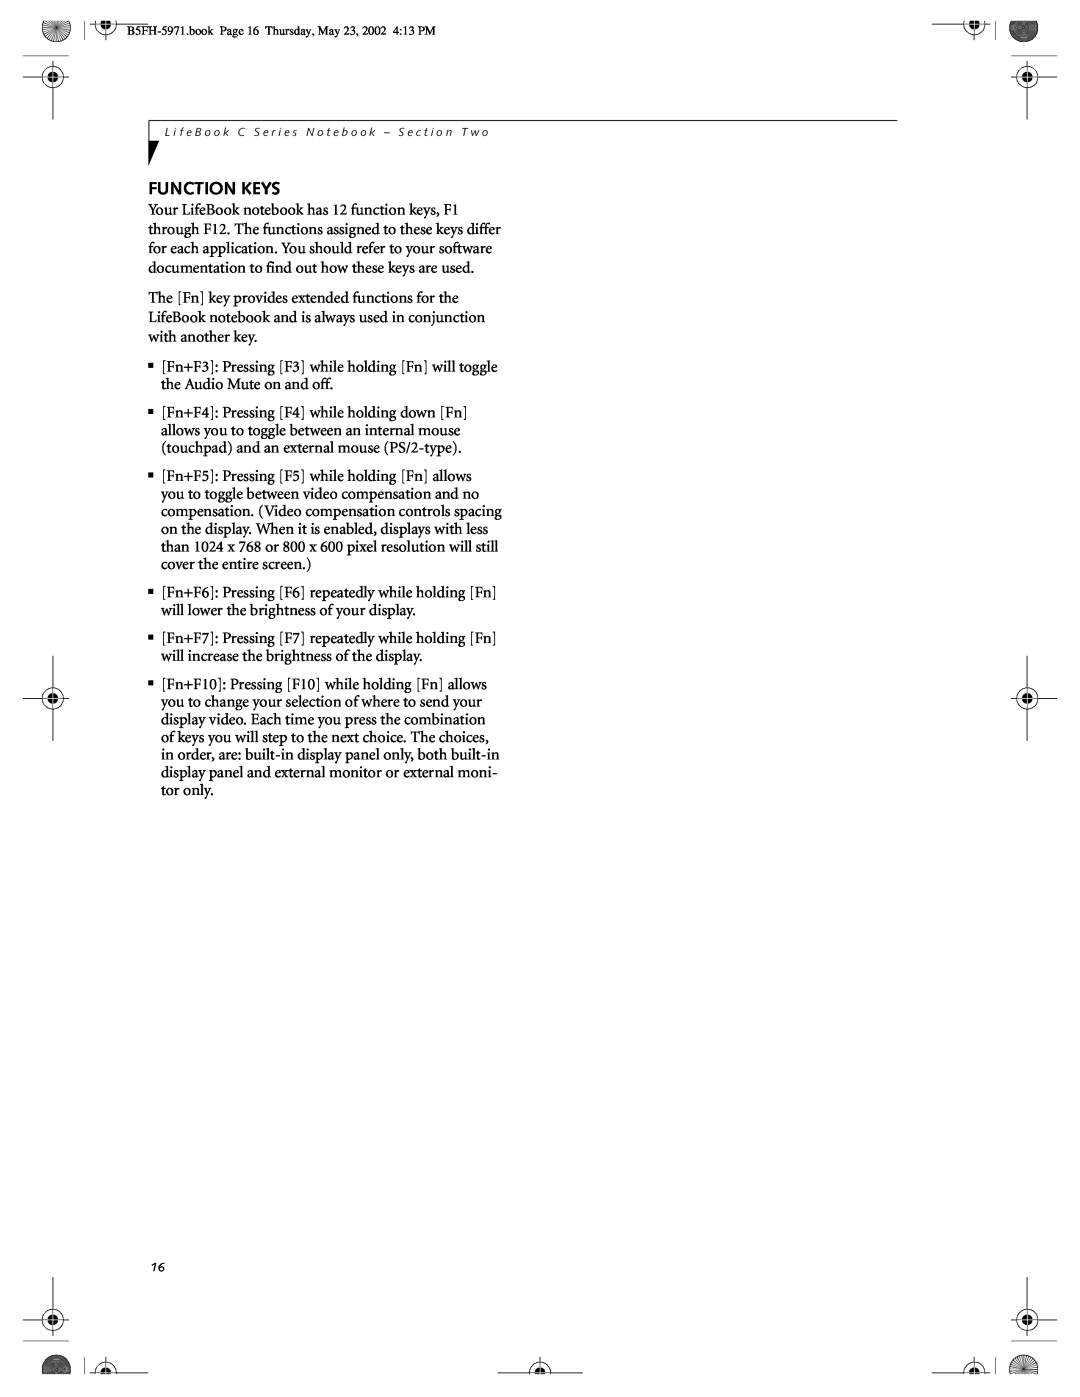 Fujitsu C2111, C2010 manual Function Keys, B5FH-5971.book Page 16 Thursday, May 23, 2002 413 PM 